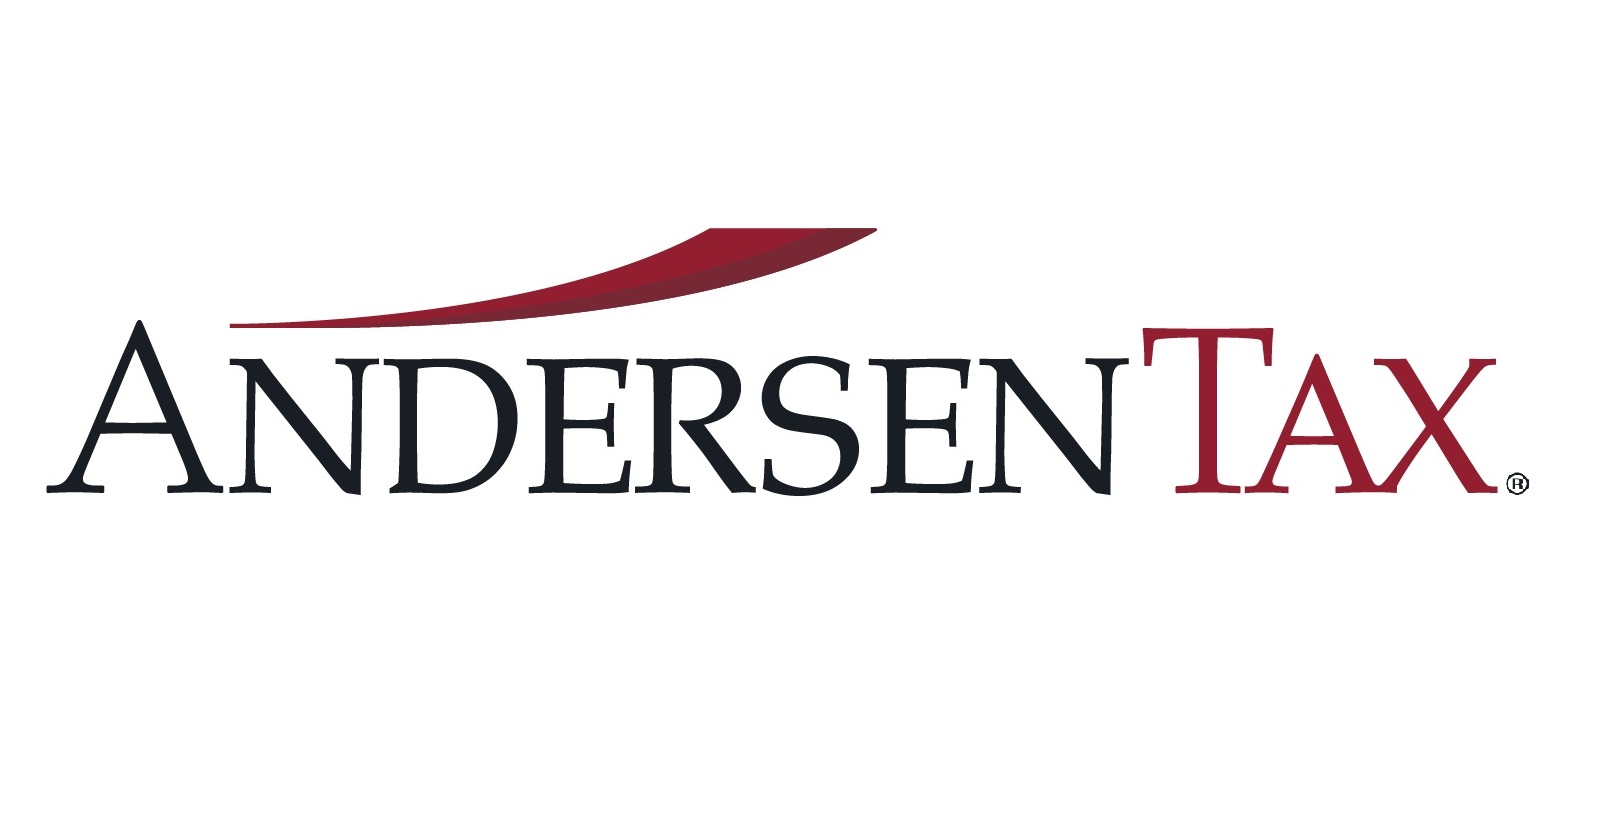 Nigerian Firm Brings Andersen Tax to Africa